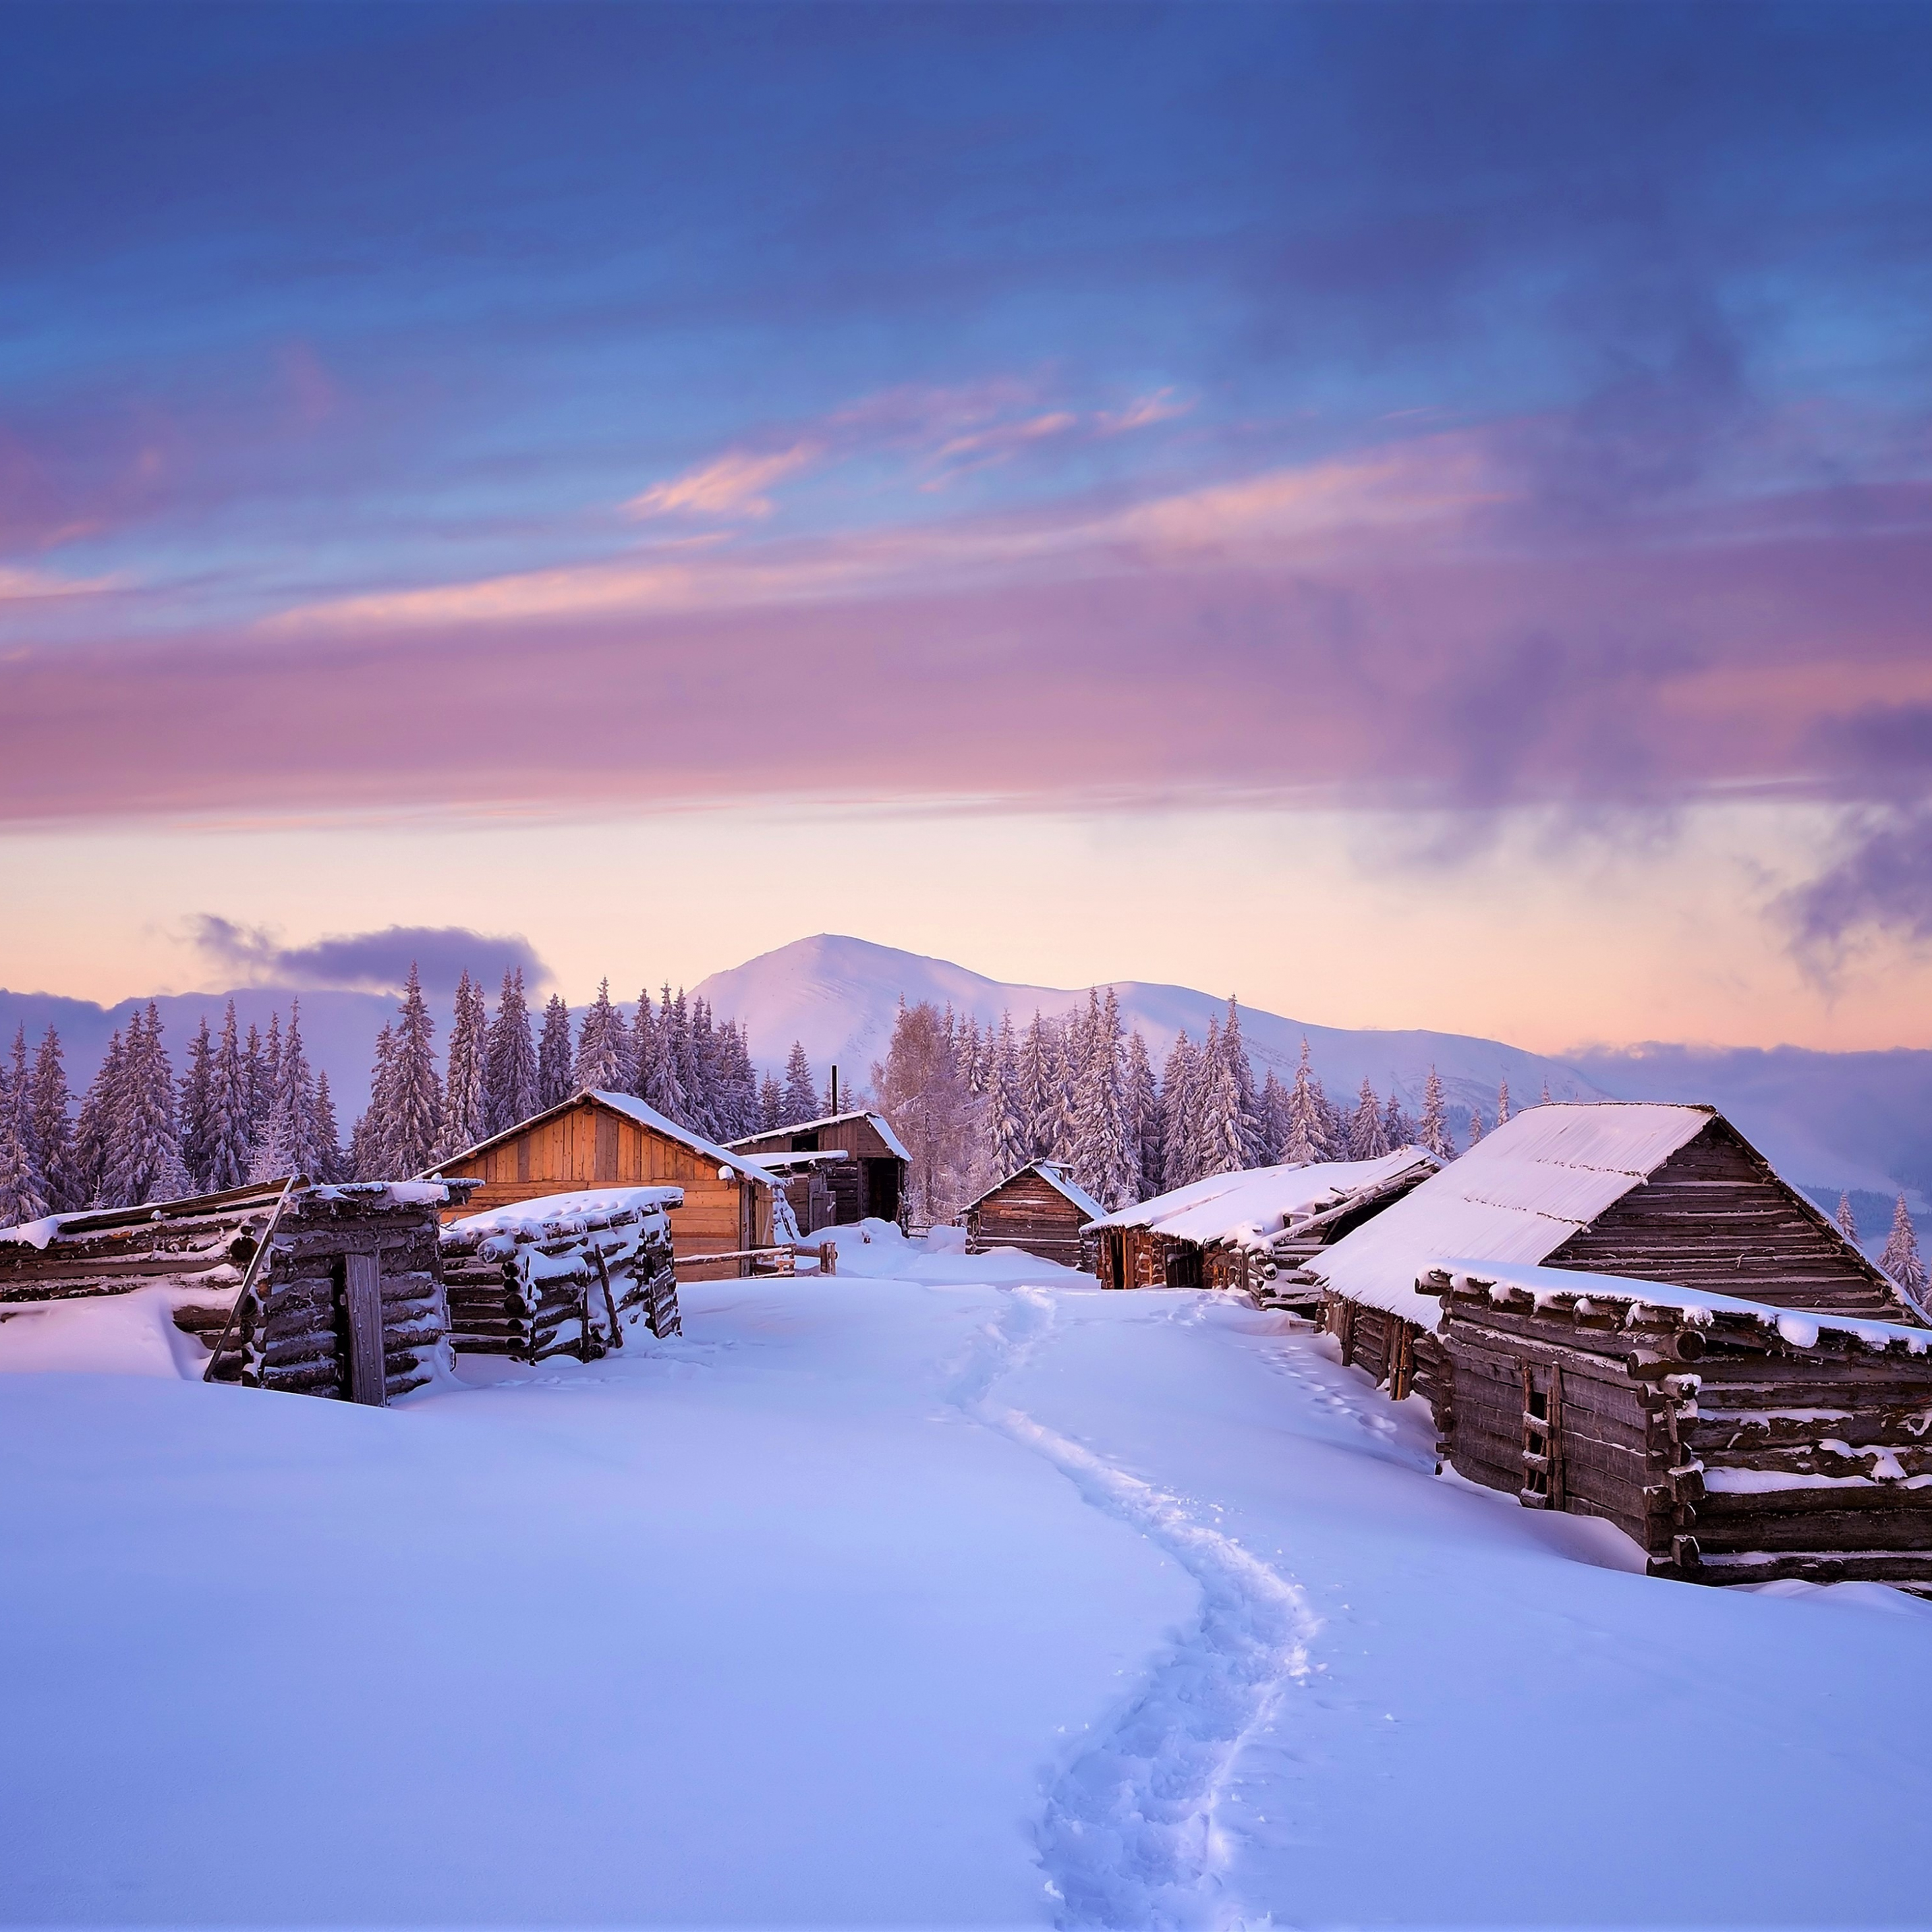 Download houses, winter, landscape, sunset 2932x2932 wallpaper, ipad pro retina, 2932x2932 image, background, 1086